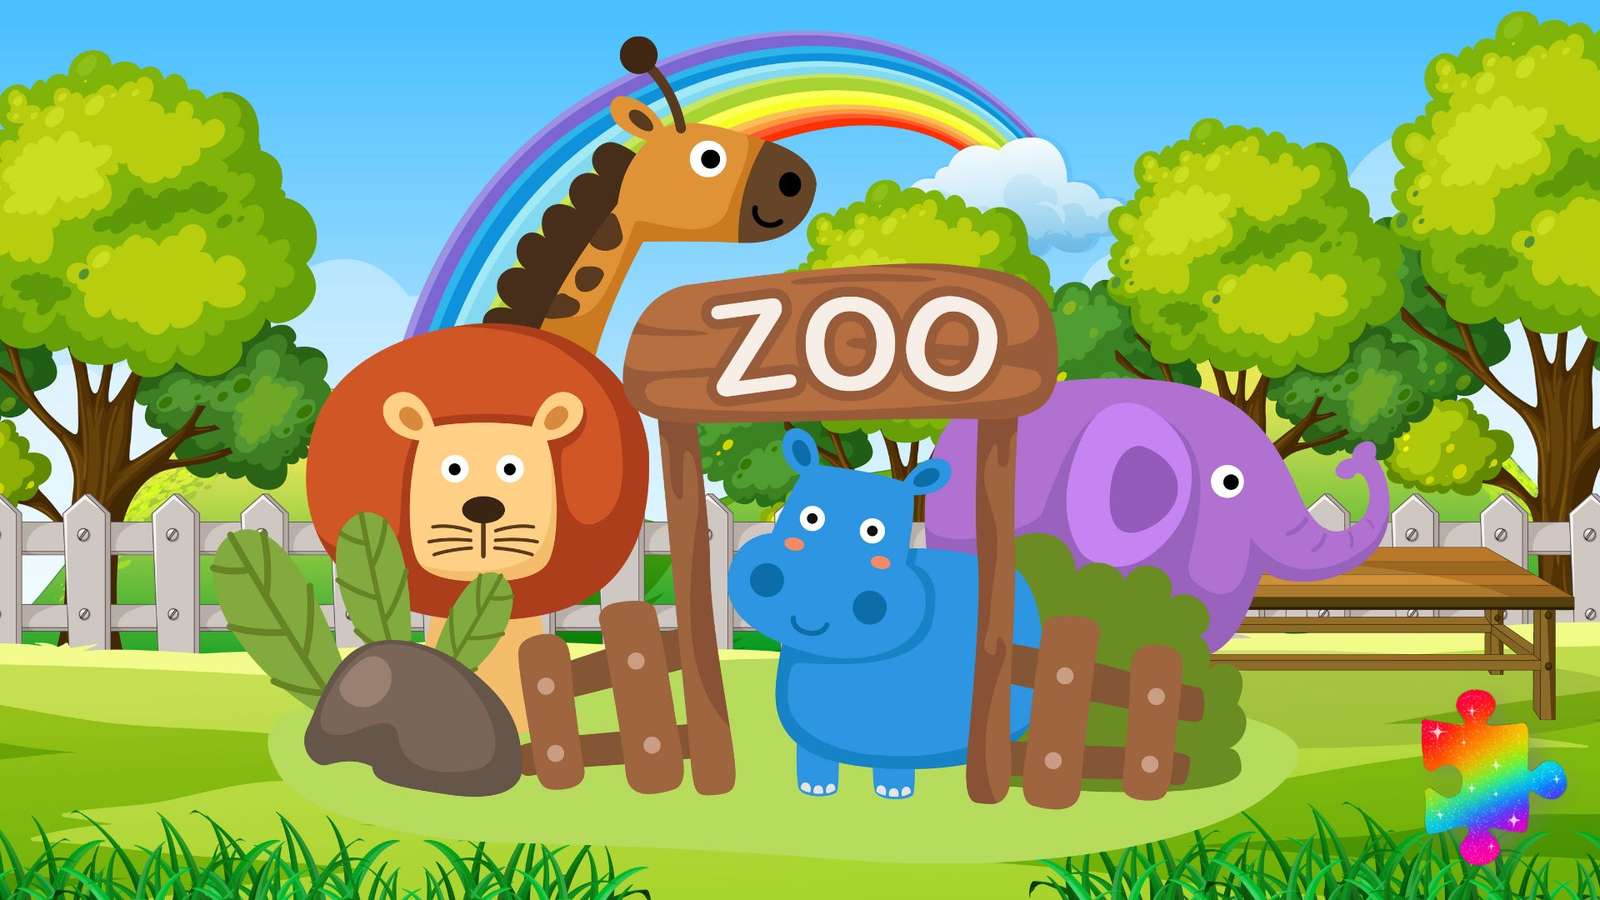 Fun Zoo Animals jigsaw puzzle online